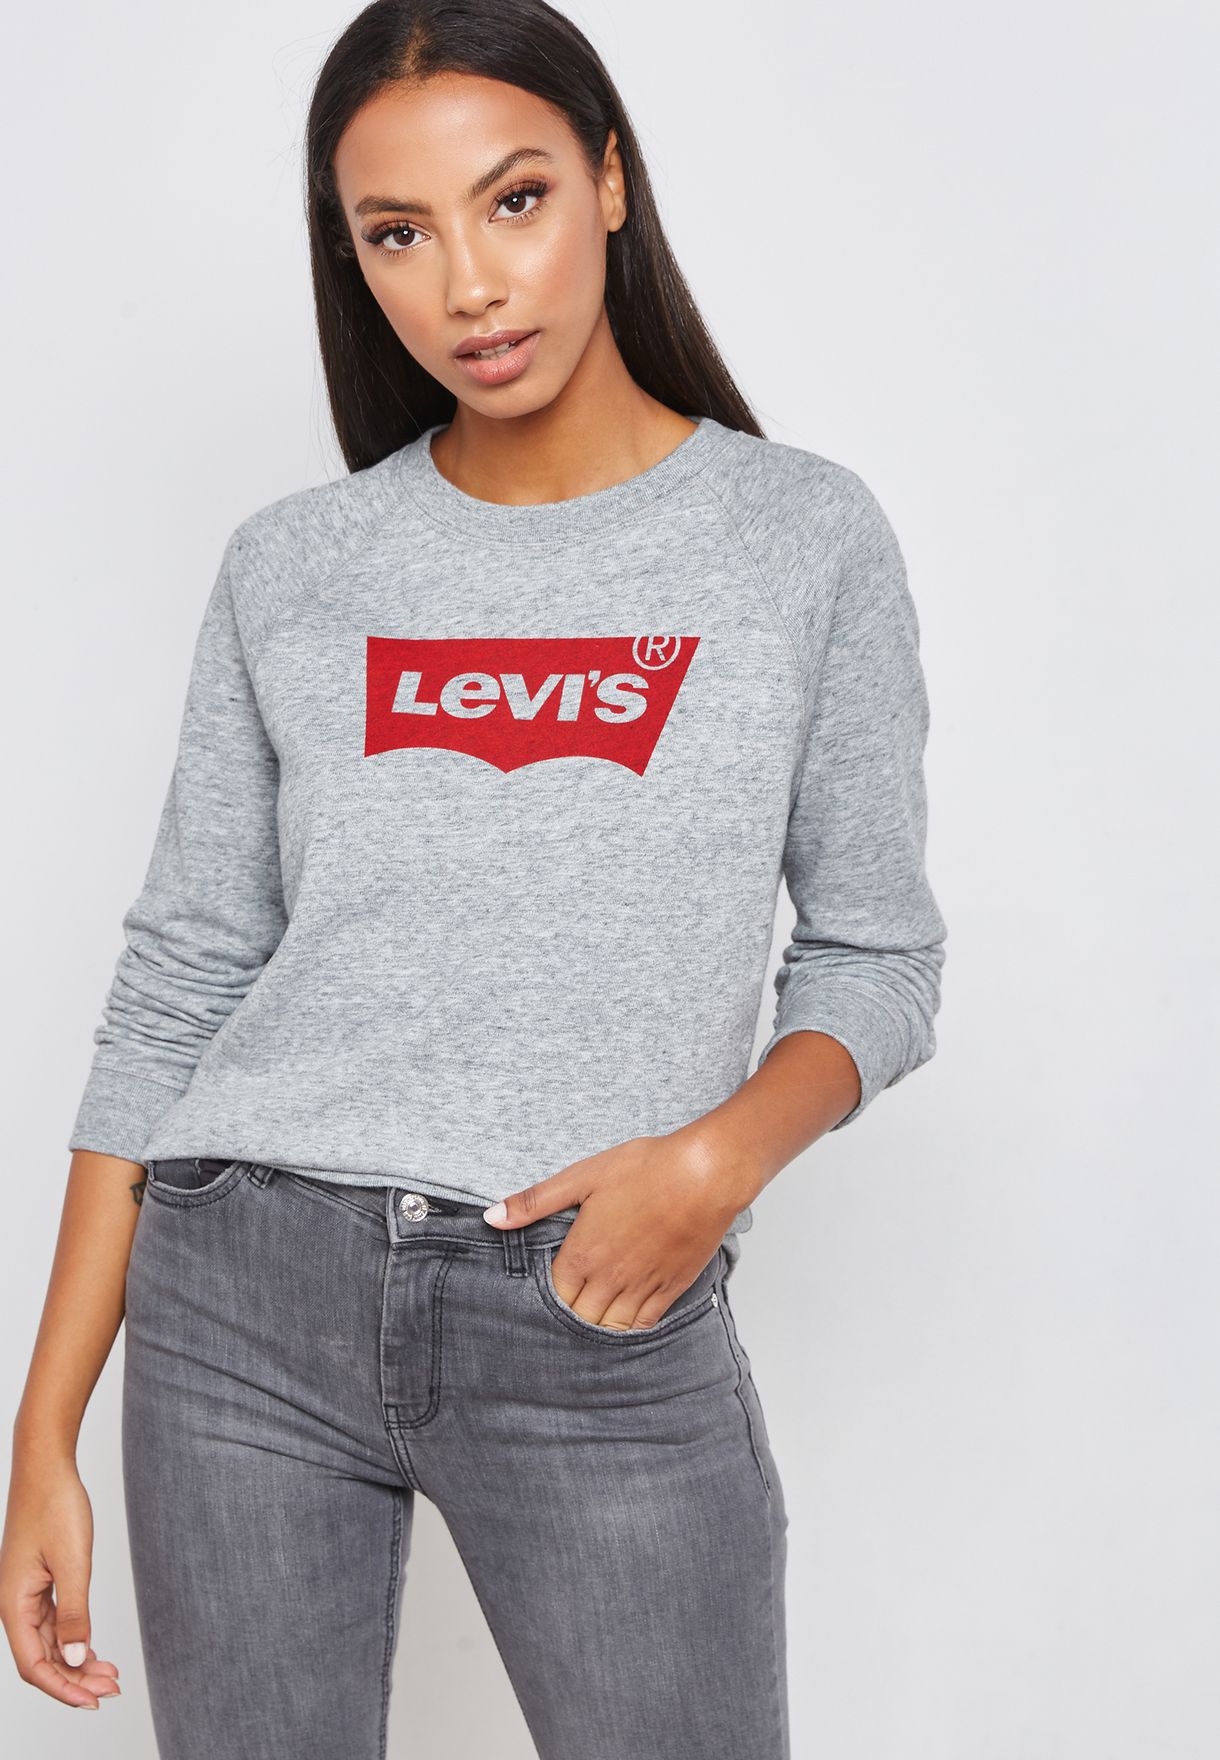 Buy Levis grey Logo Sweatshirt for 